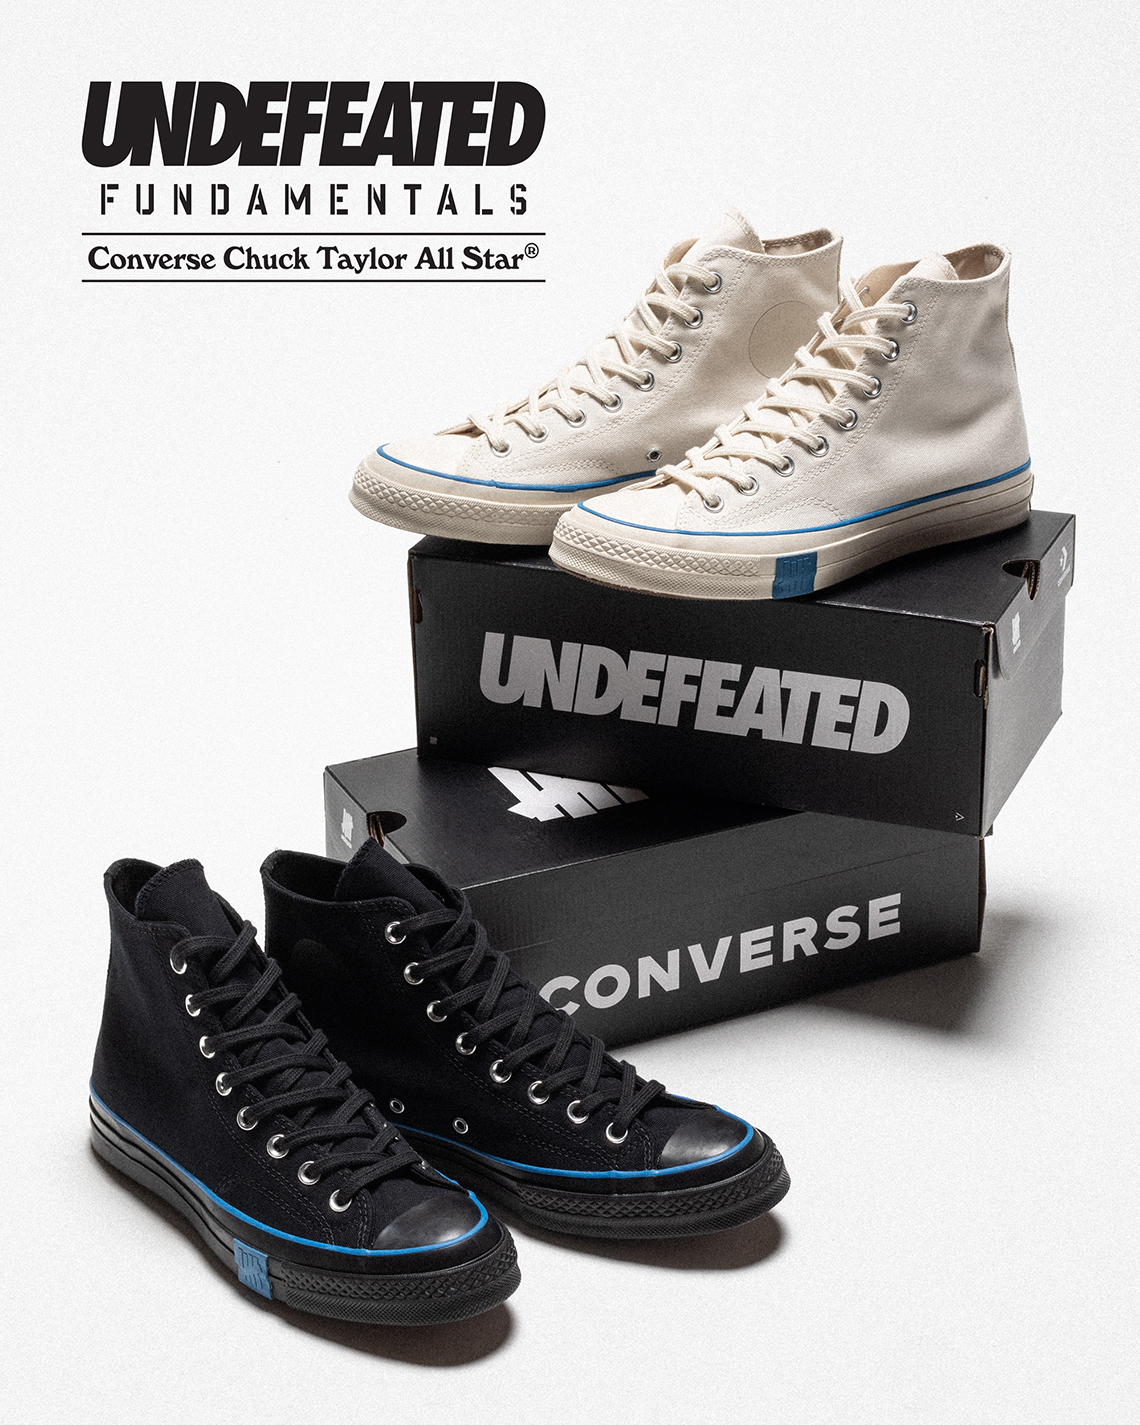 Undefeated Converse Chuck 70 Fundamentals Release Info 4